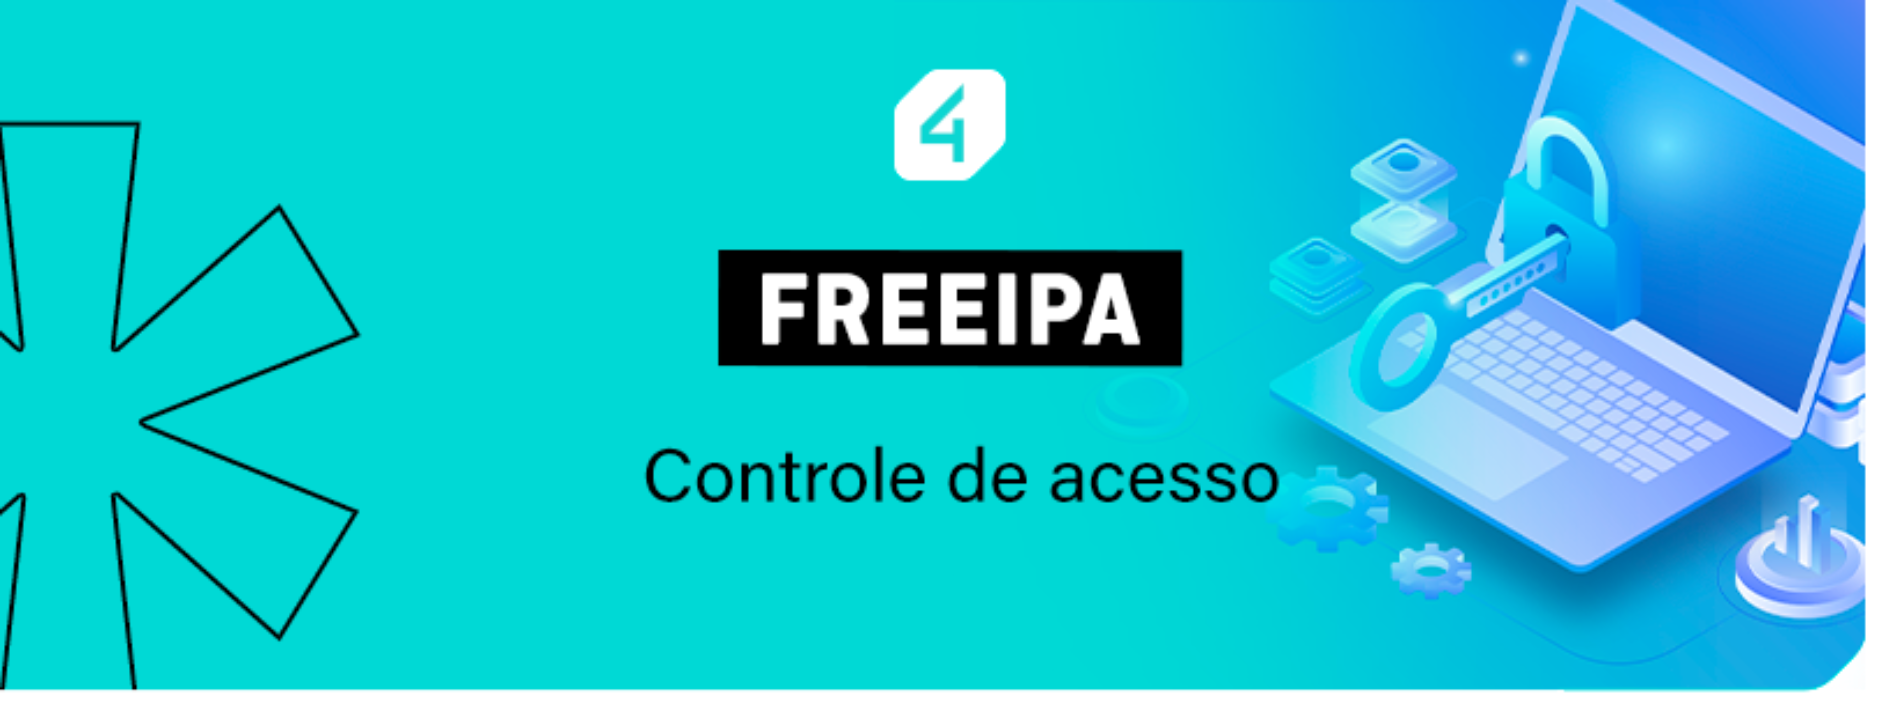 FreeIPA – Controle de acesso